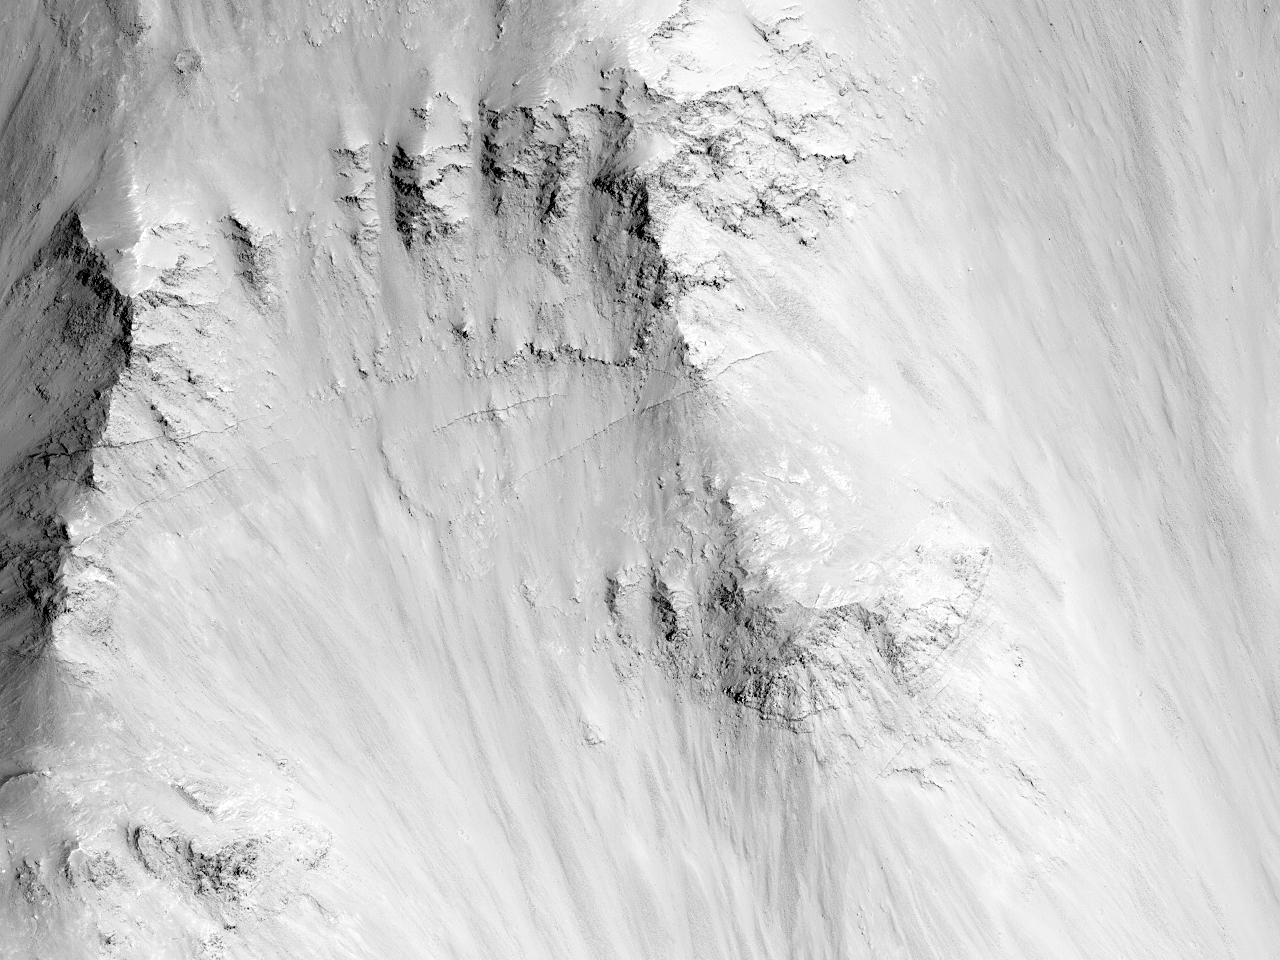 A histria geolgica marciana em Eos Chasma